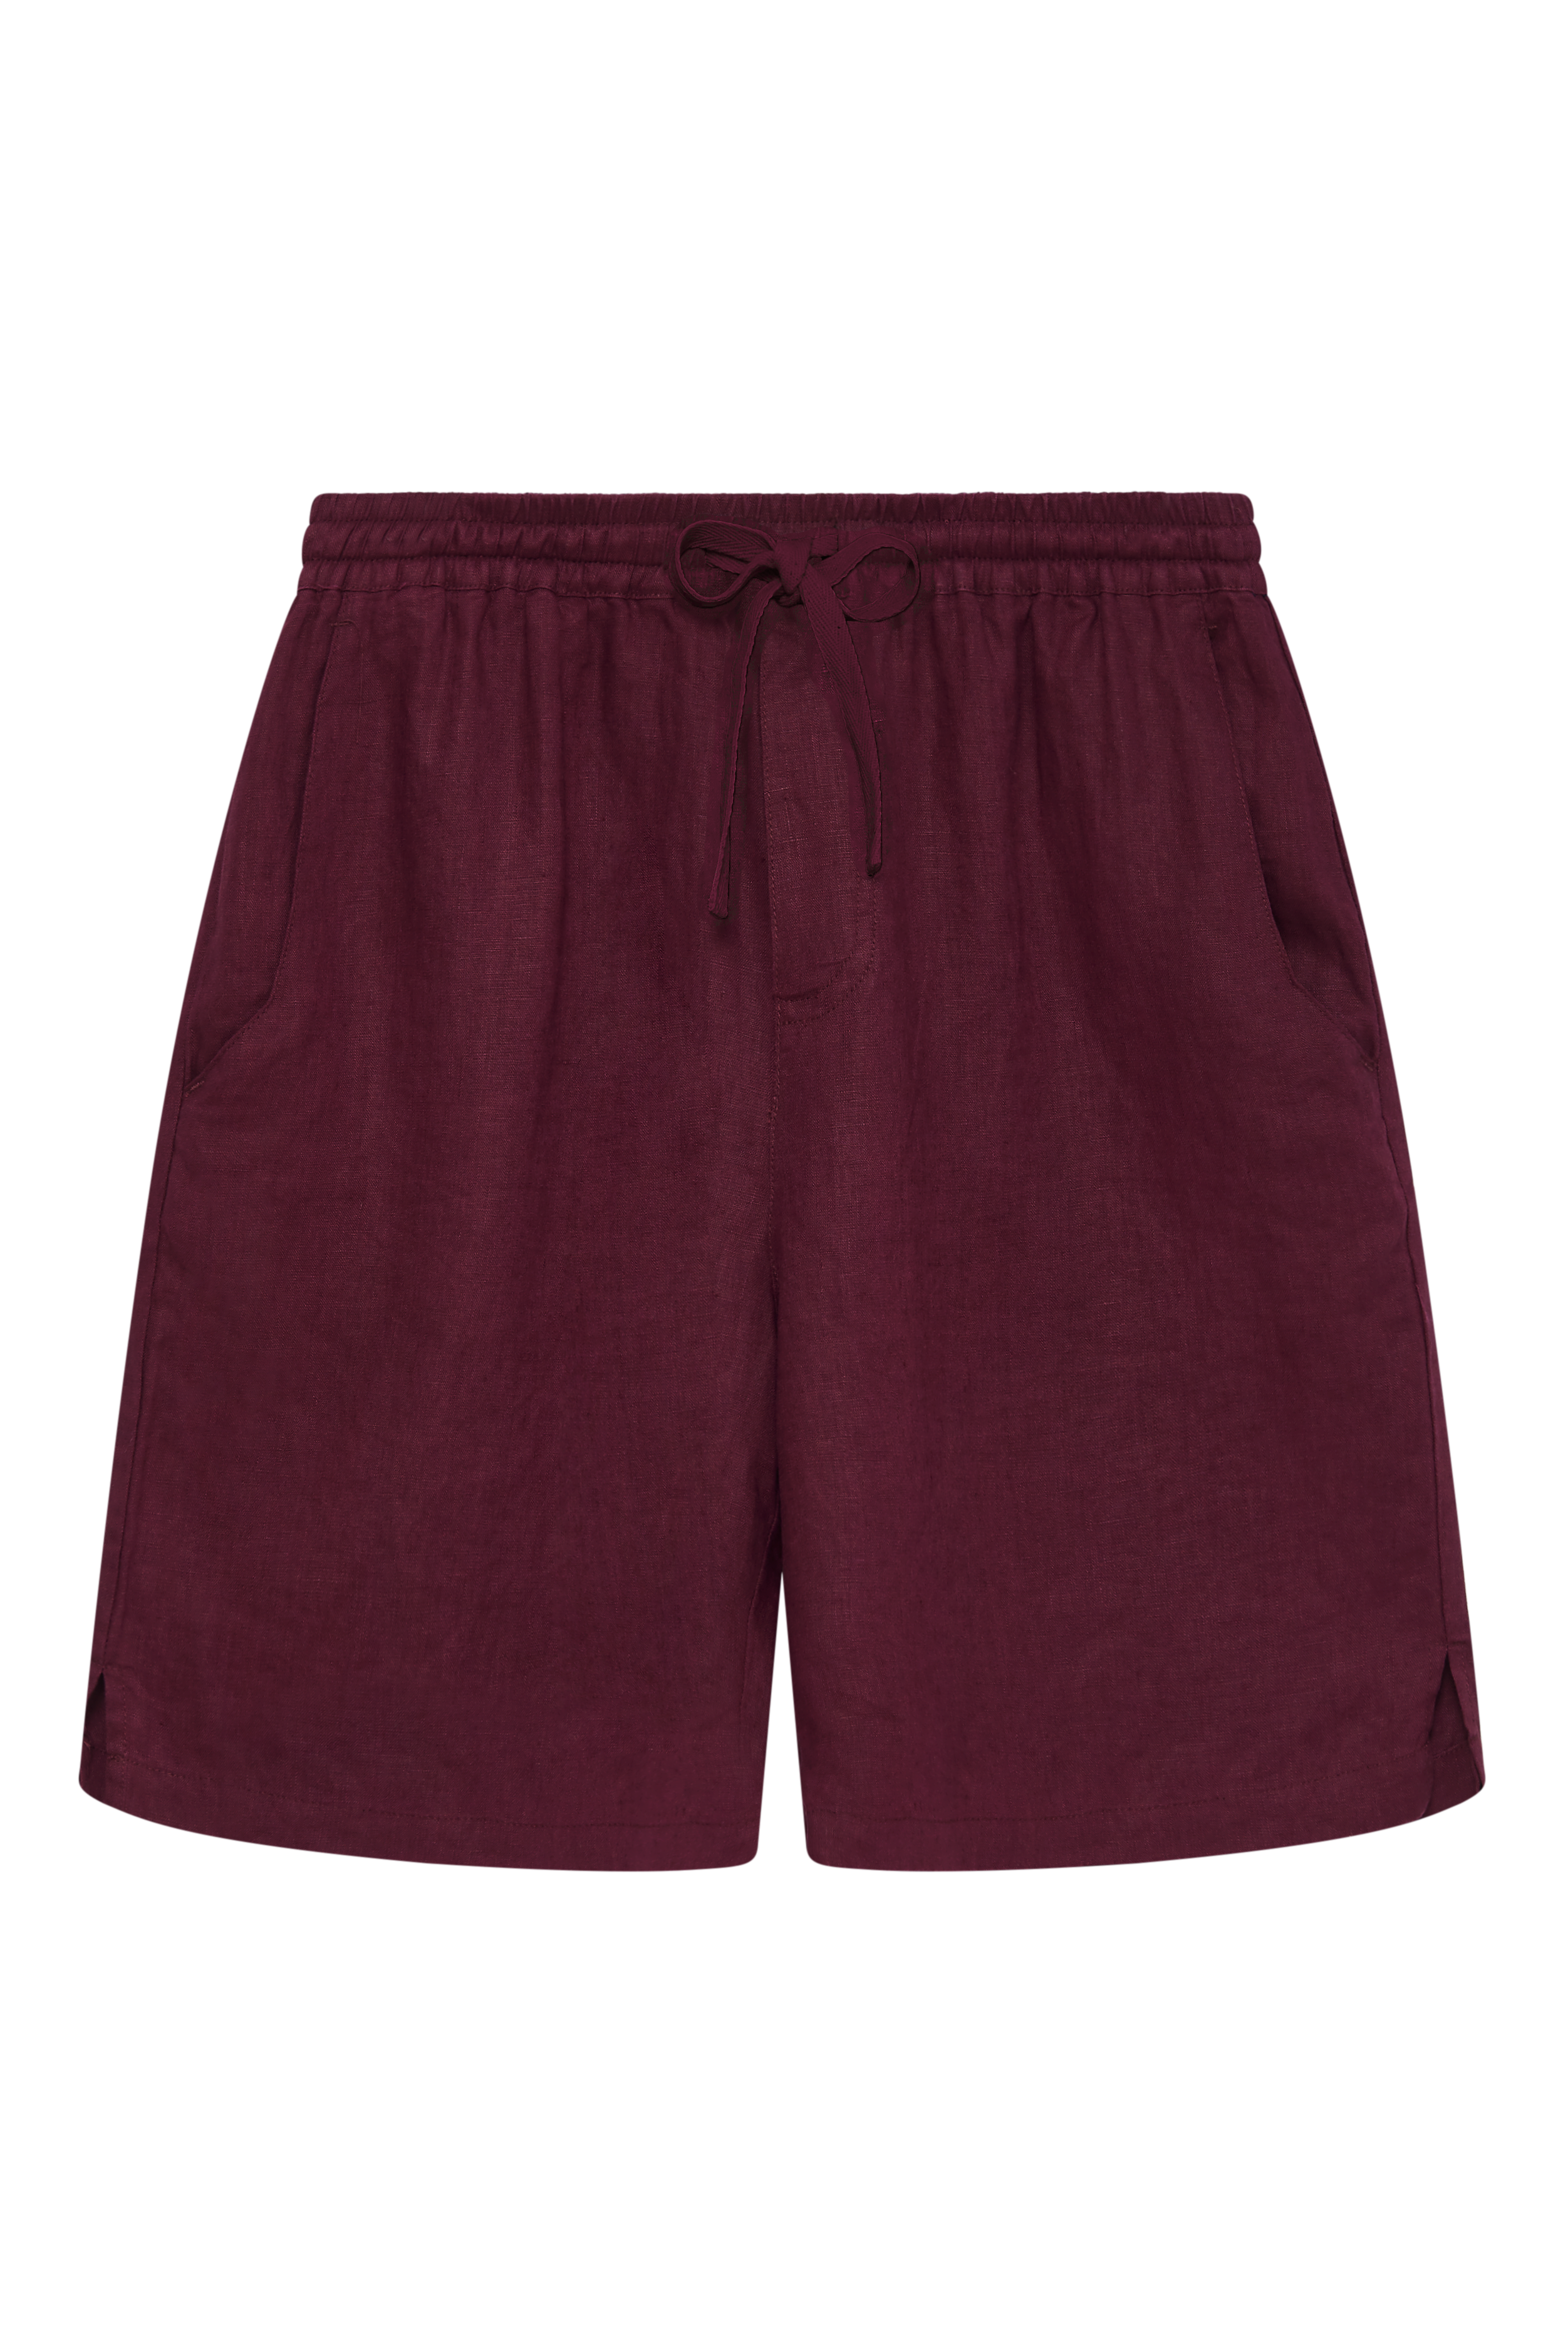 Komodo Men's Red Jerry - Linen Shorts Berry